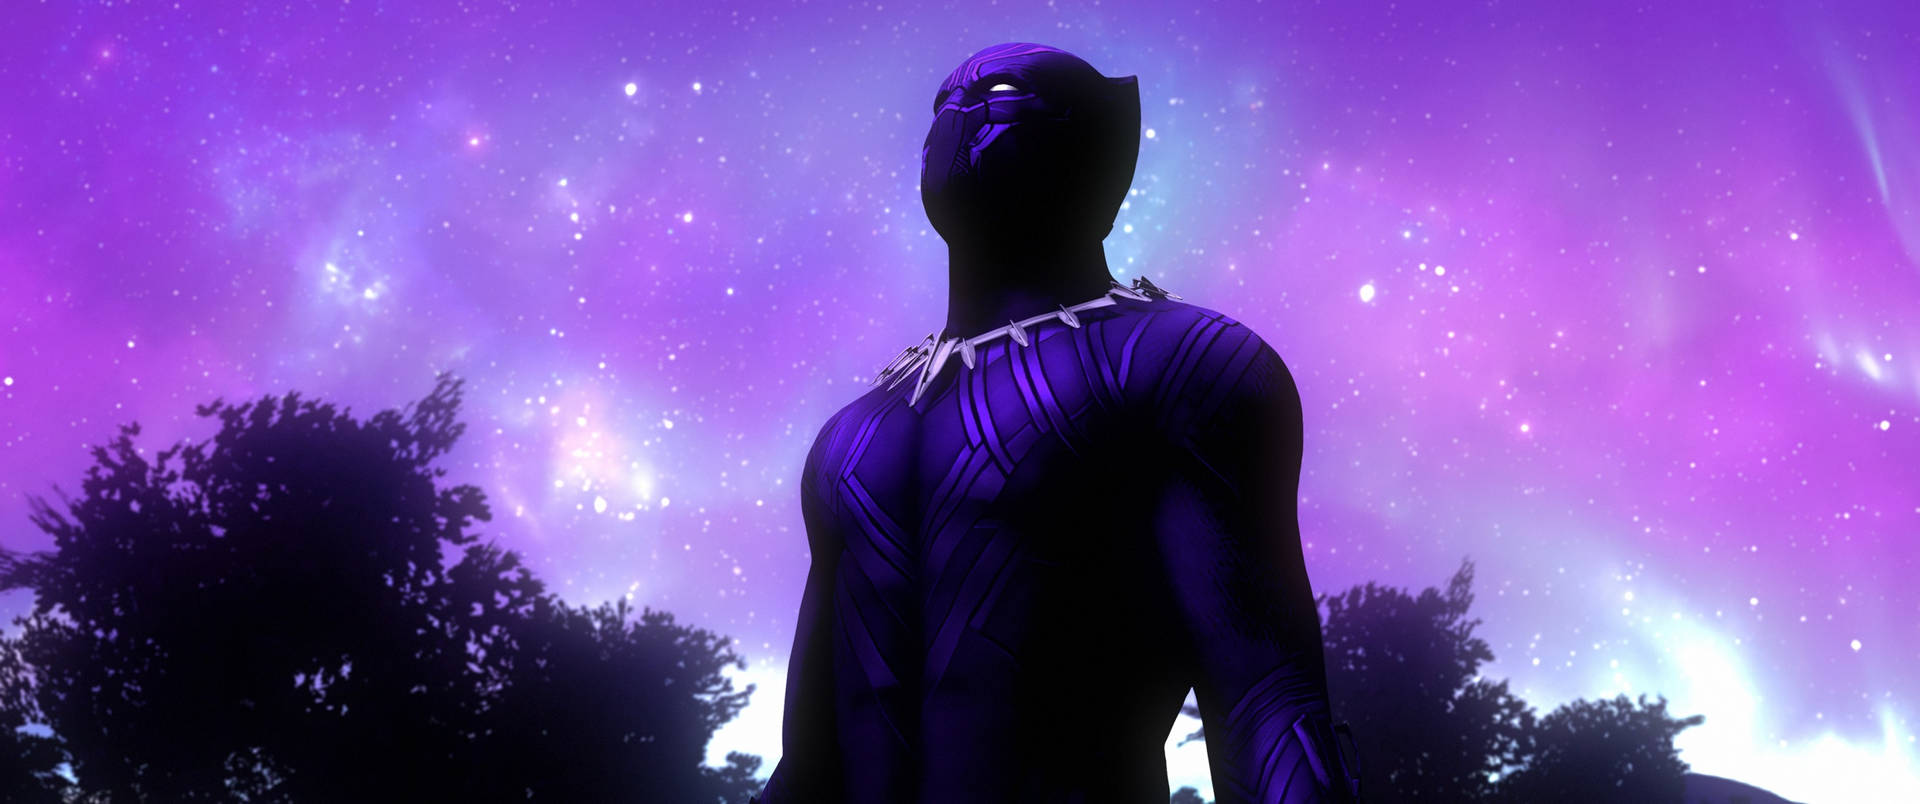 Black Panther Superhero Aesthetic Purple Sky Background